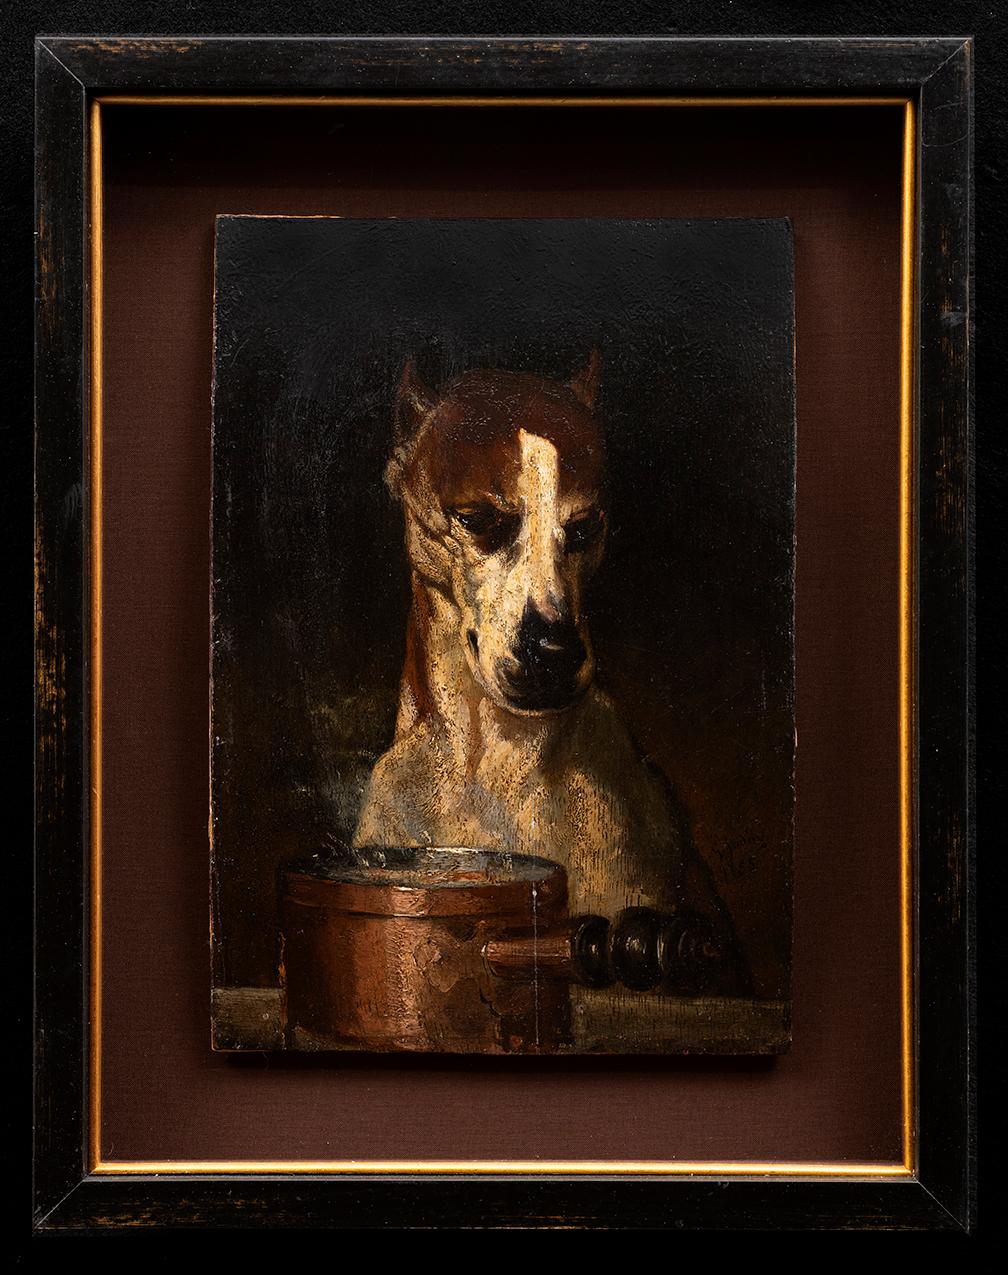 Antique Dog Portrait "A Fine Gourmet!" 1855 by Louis Godefroy Jadin (1805-1882)